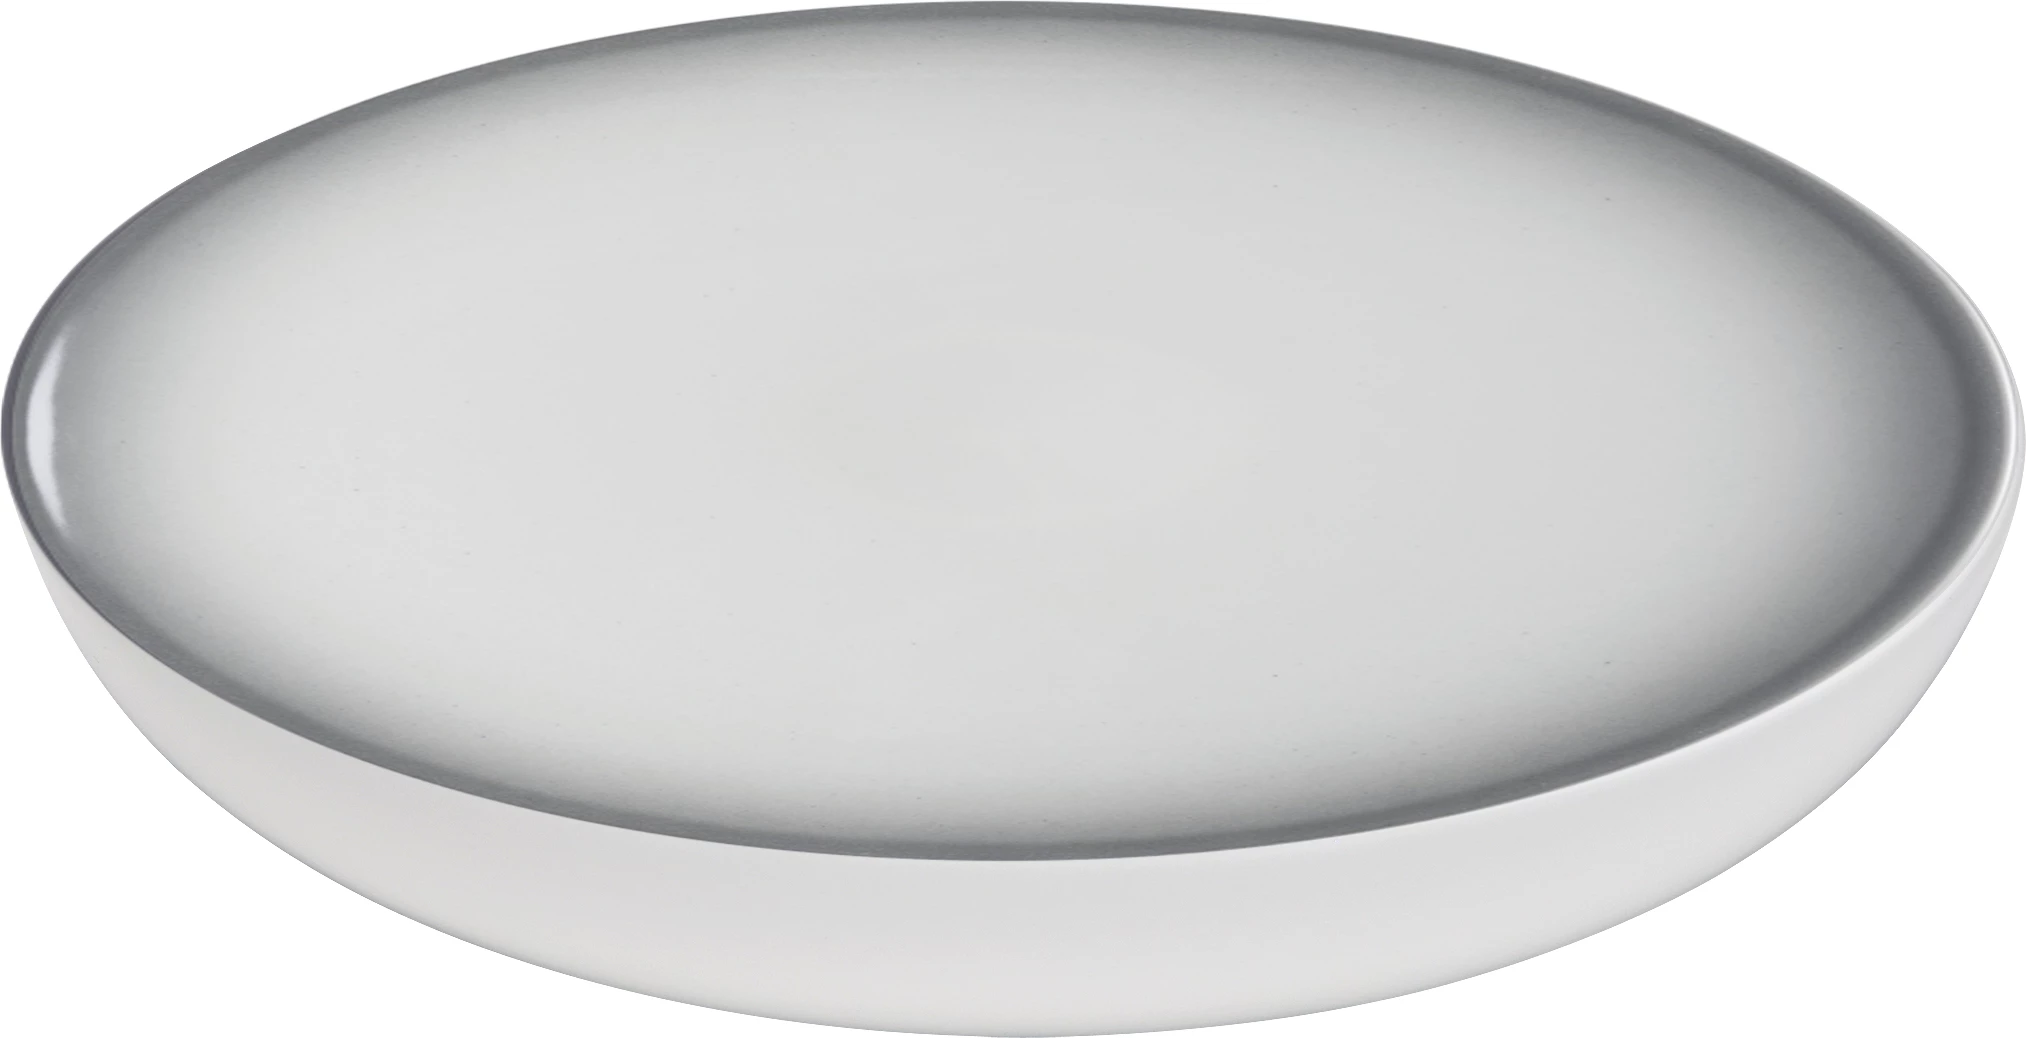 Figgjo 360 tallerken med høj kant uden fane, 360 grå, flad, ø22 cm